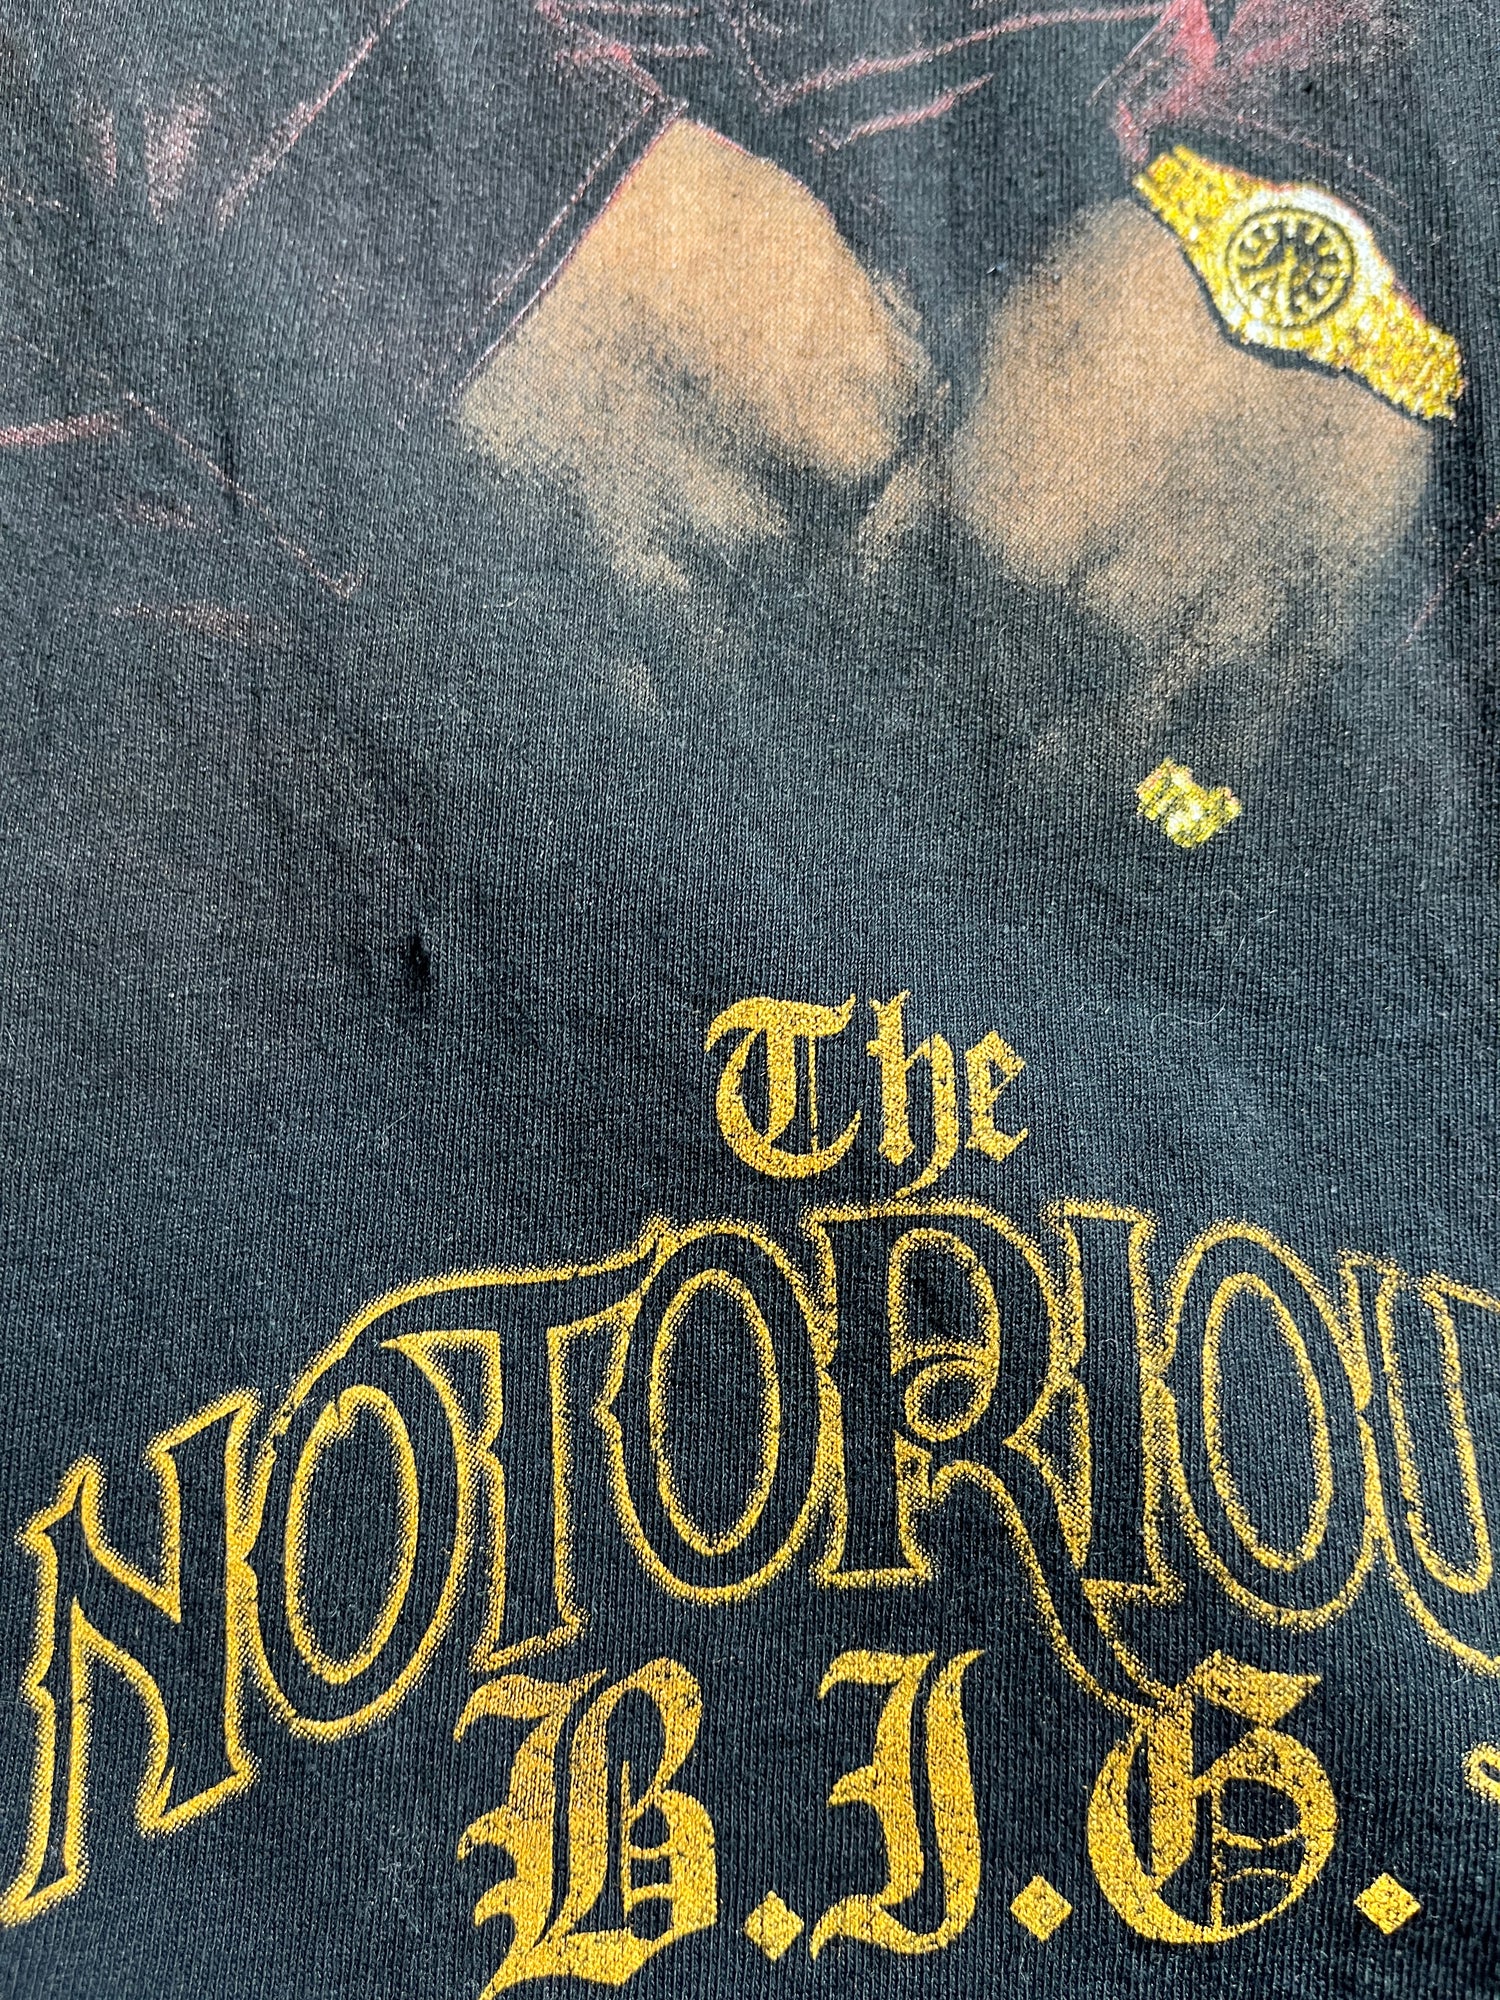 Vintage Notorious BIG T Shirt Biggie Smalls Lyrics Dice Rap Tee